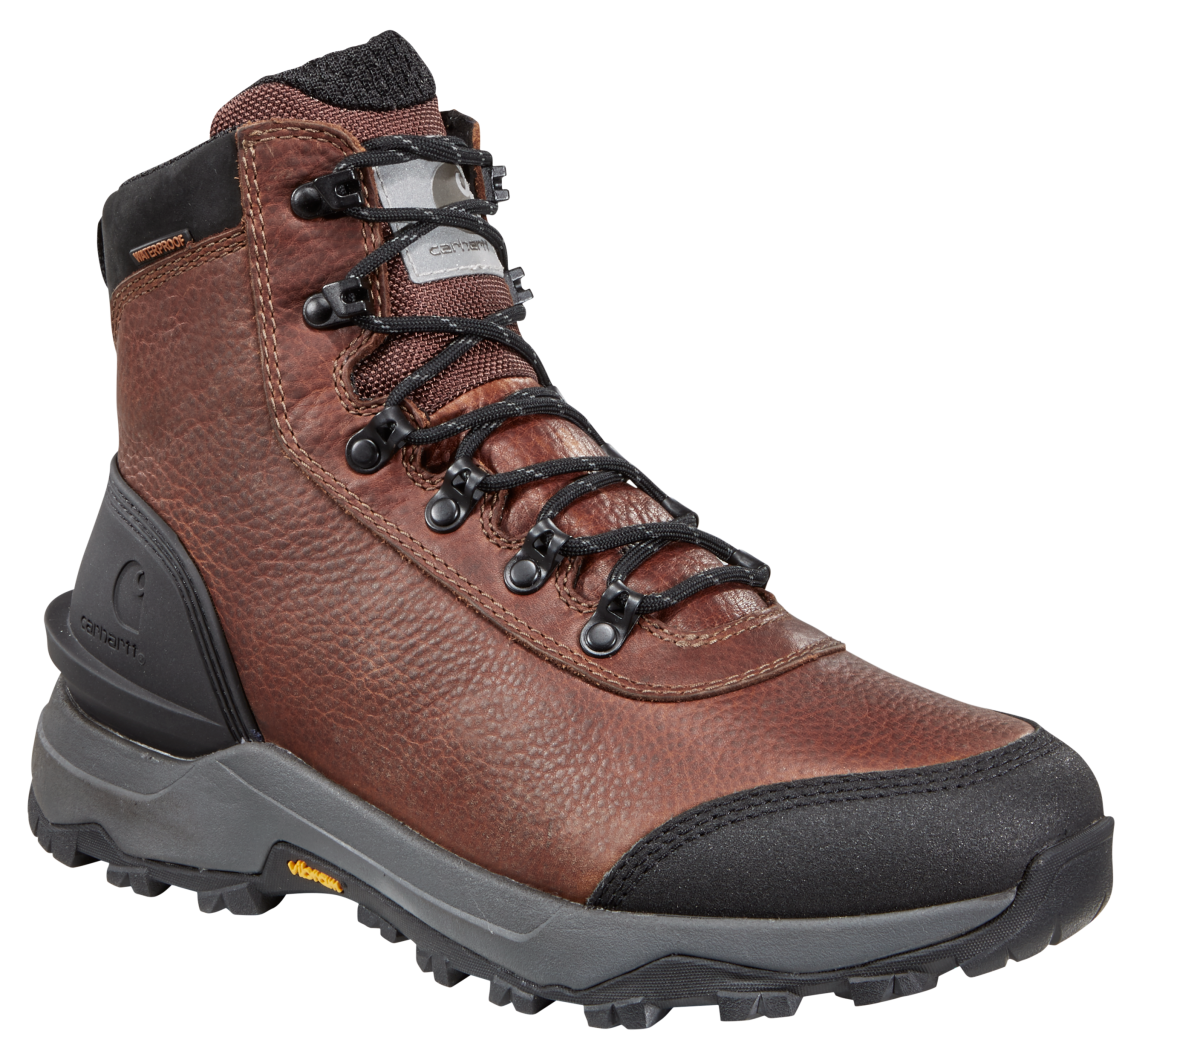 Carhartt Outdoor Hiker Insulated Waterproof Hiking Boots for Men